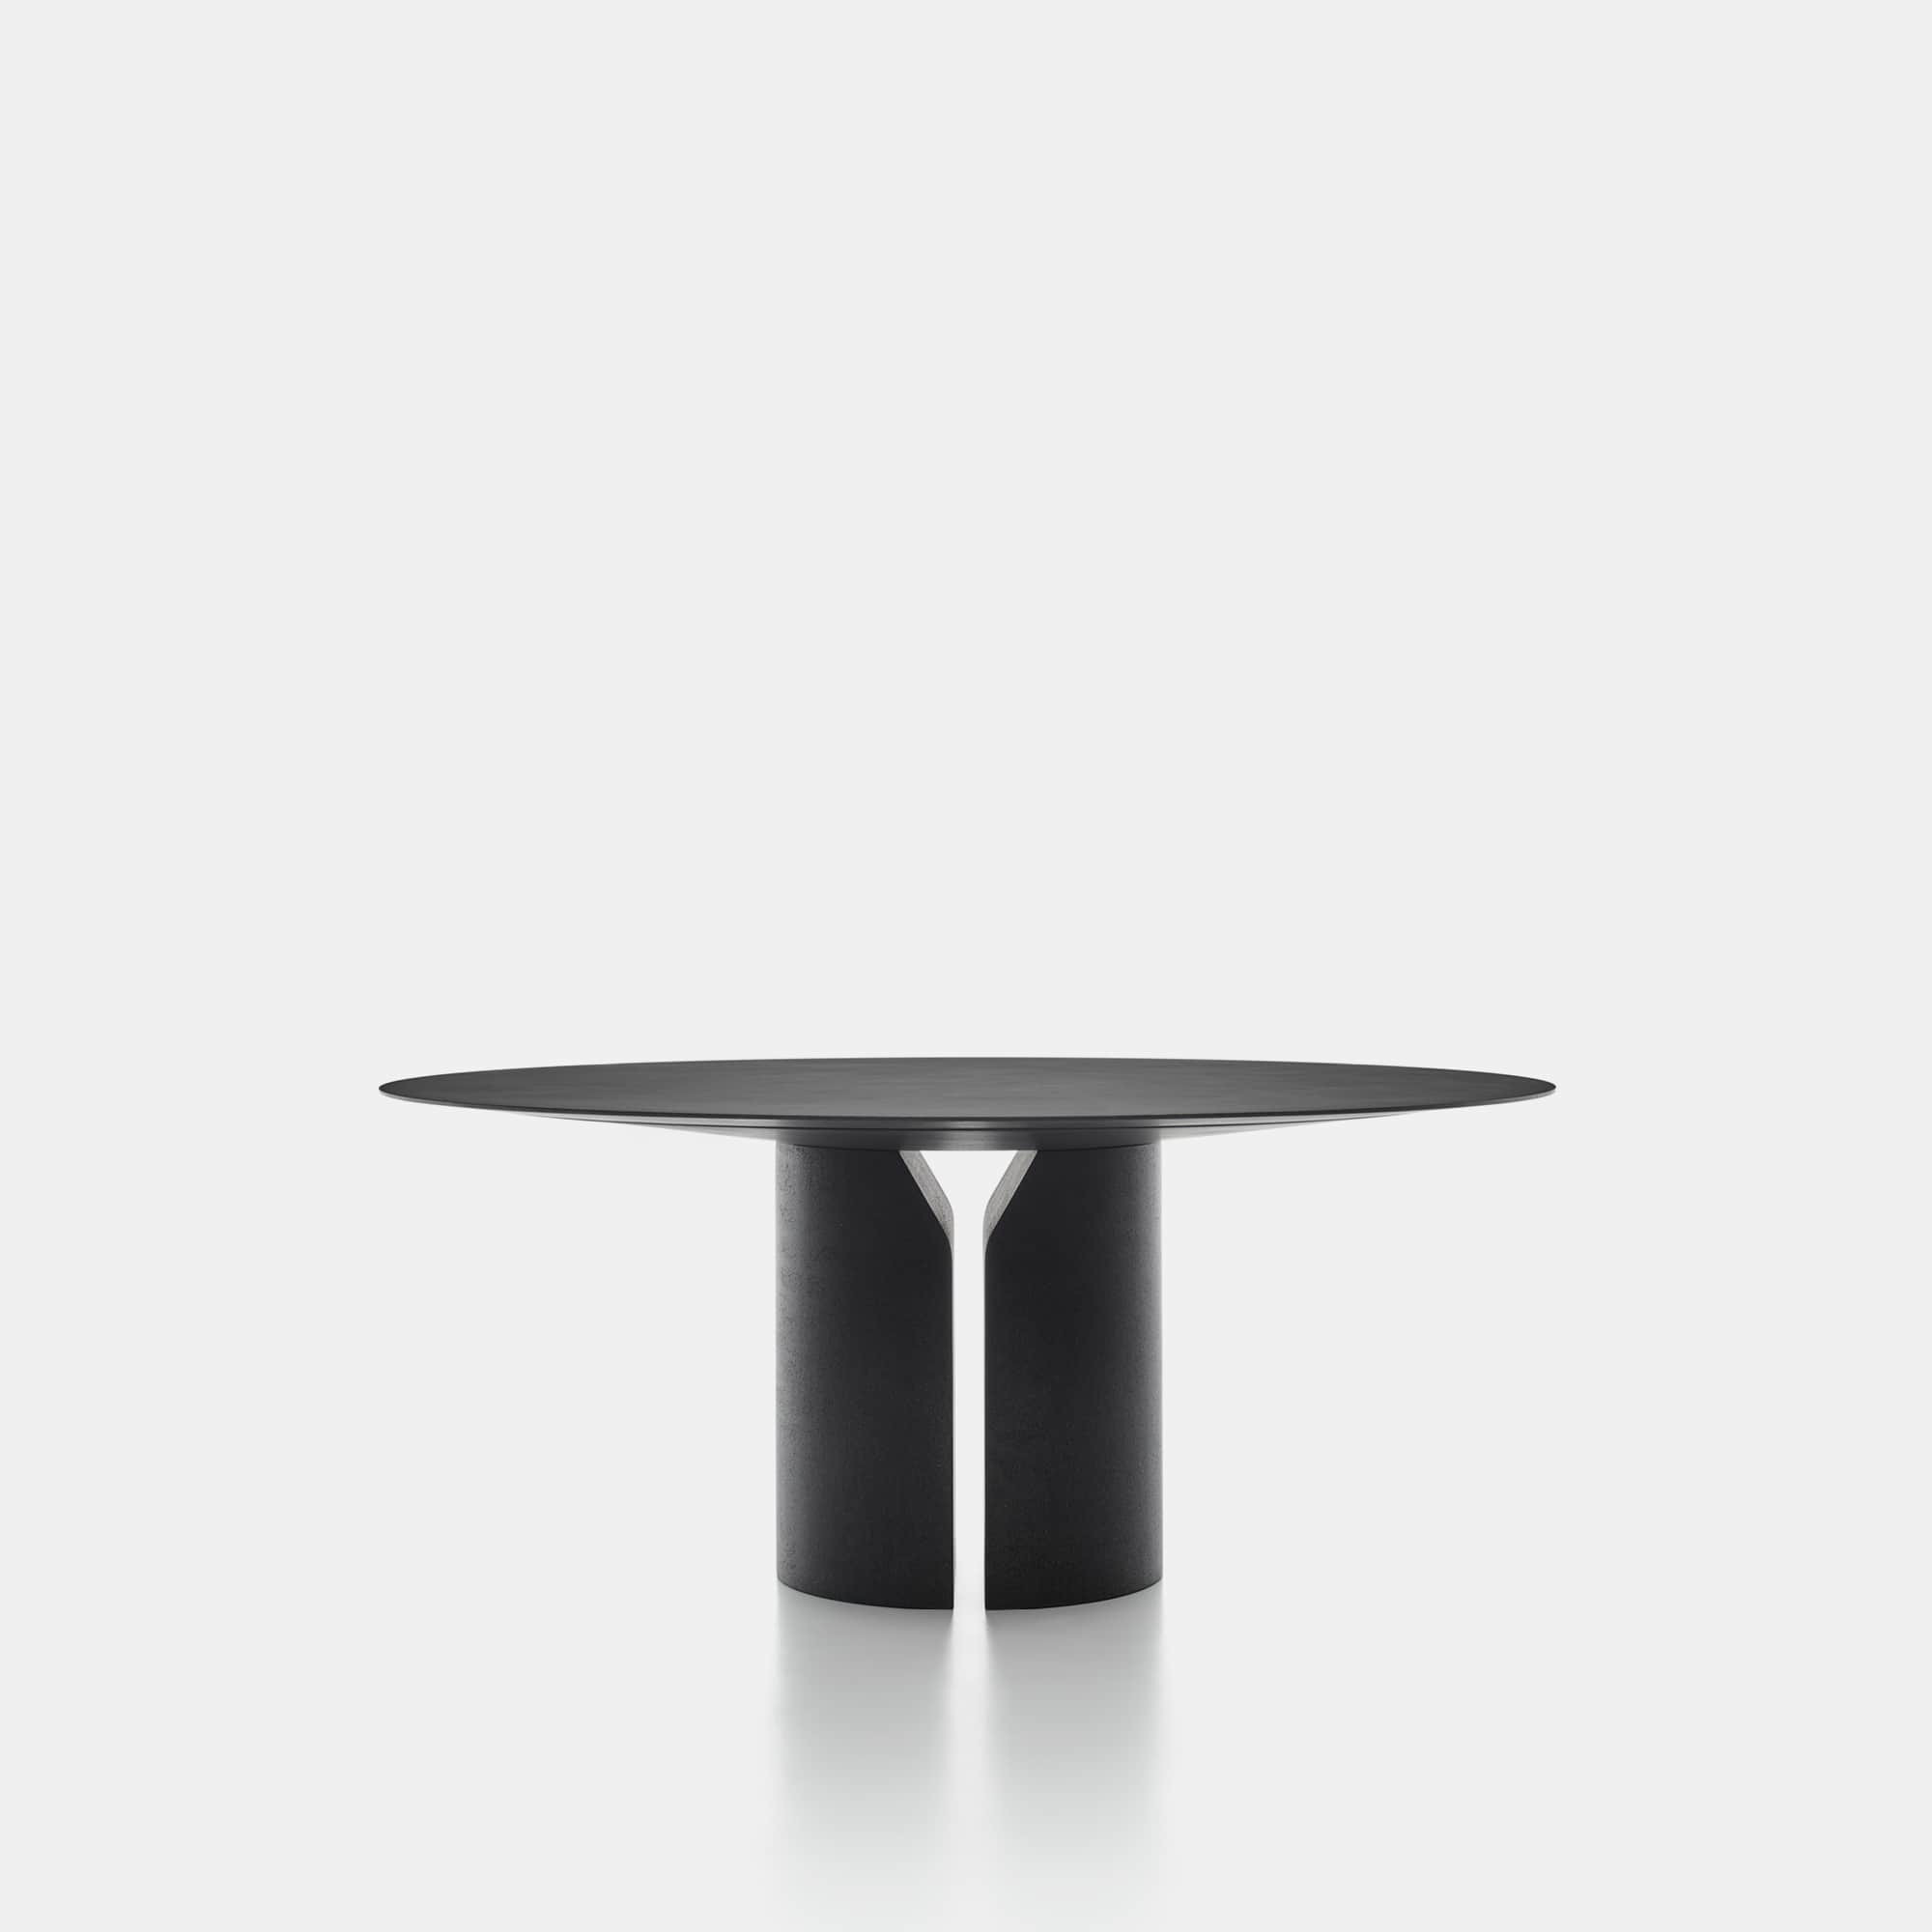 rollen Compatibel met Potentieel NVL Table. Round and oval design table designed by Jean Nouvel.